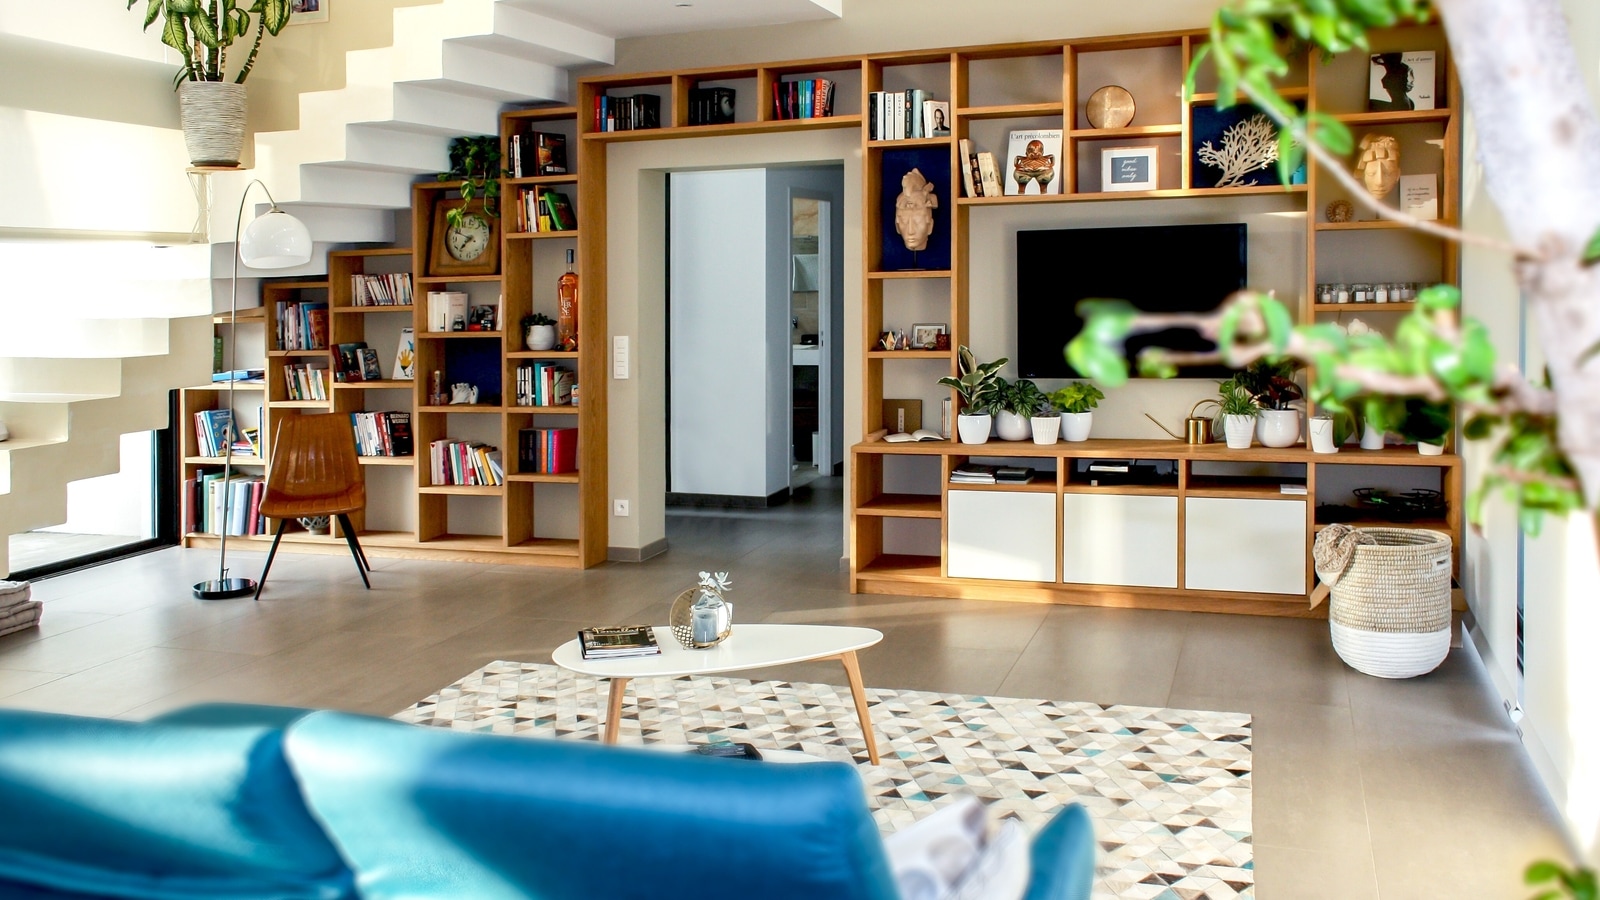 Home decor, interior design tips: Space saving ideas to turn house spacious